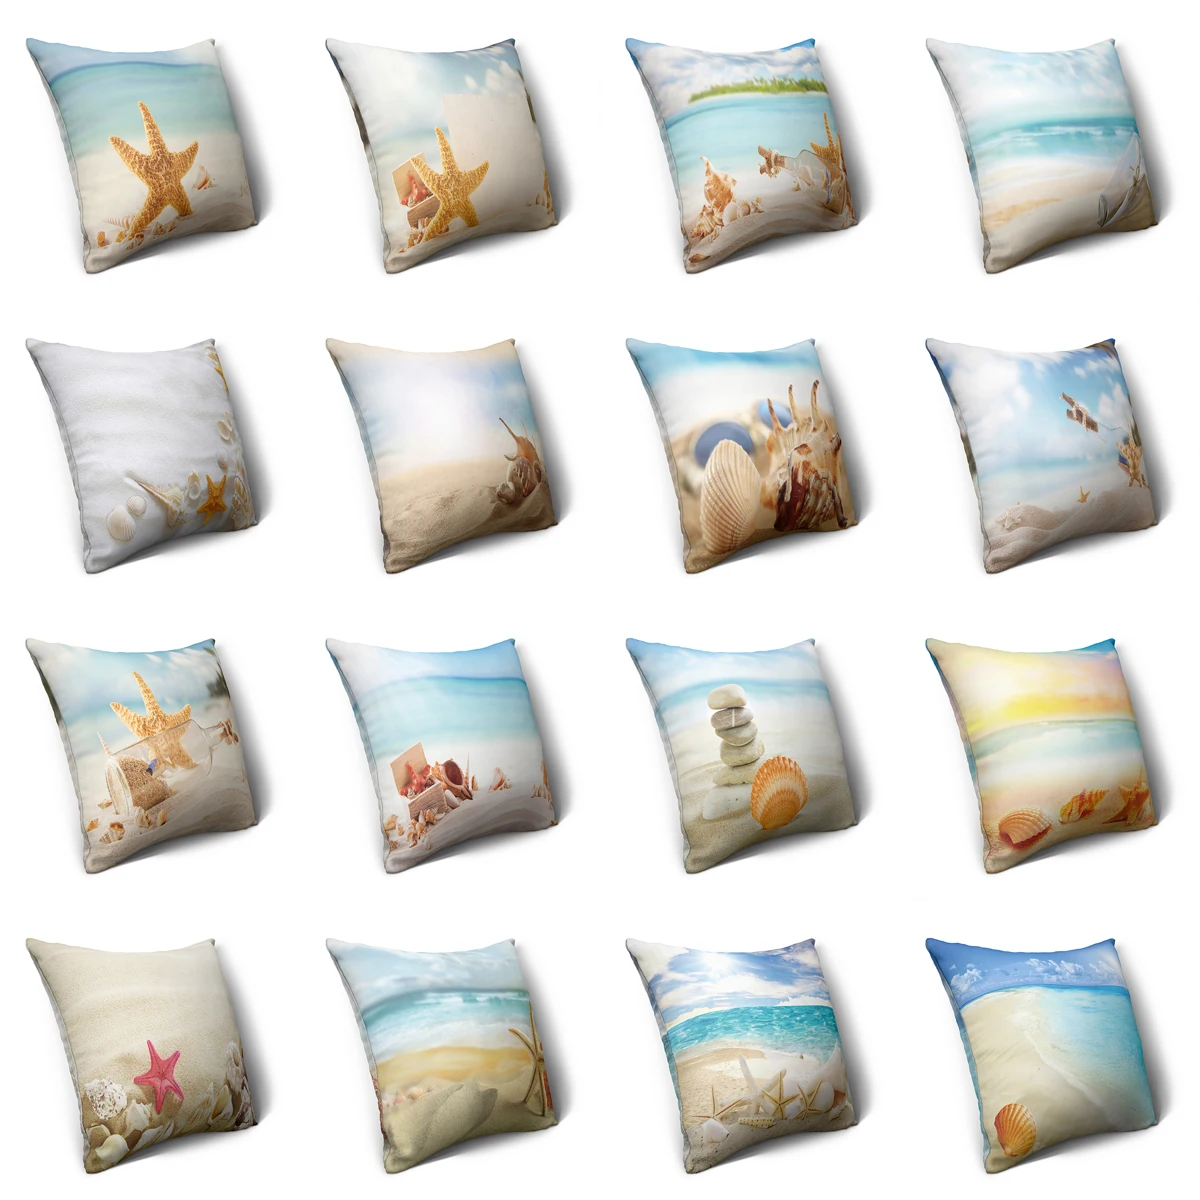 

ZHENHE Sunshine Beach Scenery Pillow Case Double Sided Printing Cushion Cover for Bedroom Sofa Balcony Decor 18x18 Inch（45x45cm）